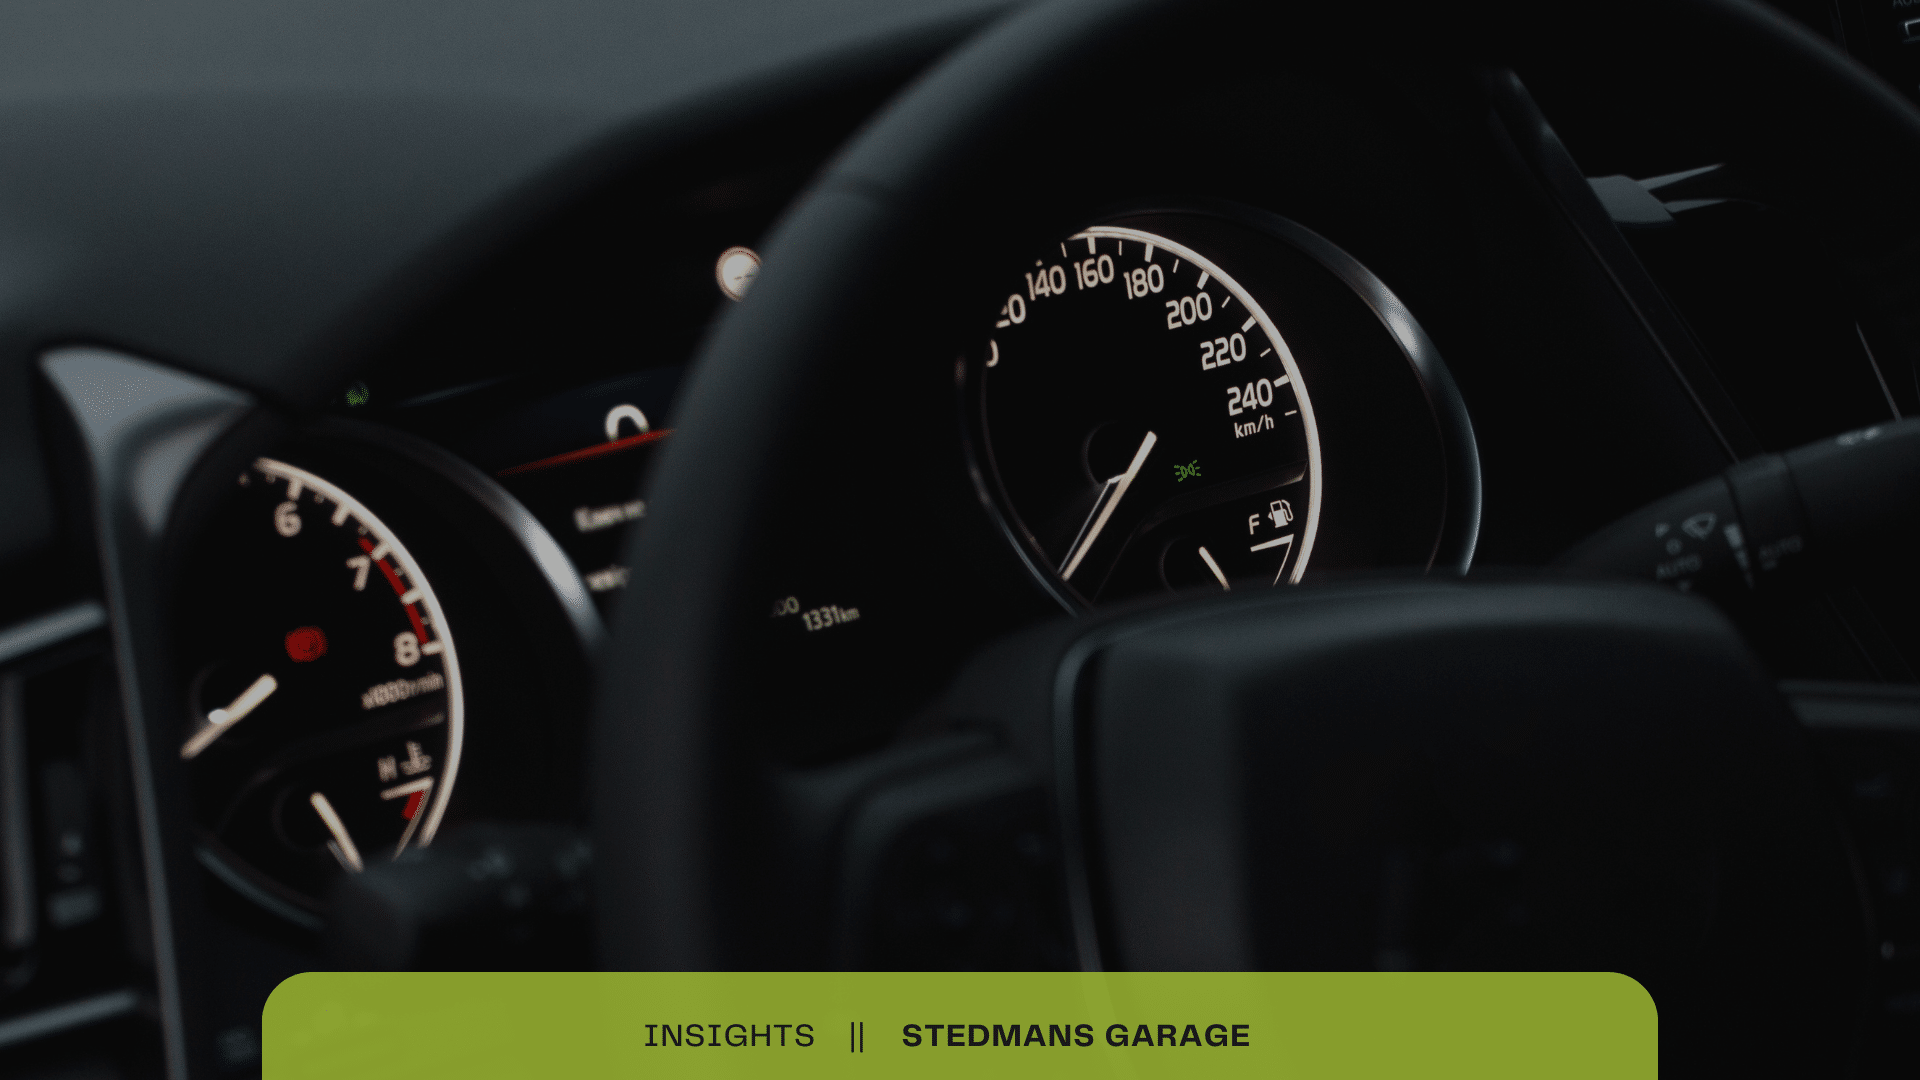 Stedmans Garage Insights located in Worthing Understanding BMW's EfficientDynamics: Eco-Friendly Meets Performance